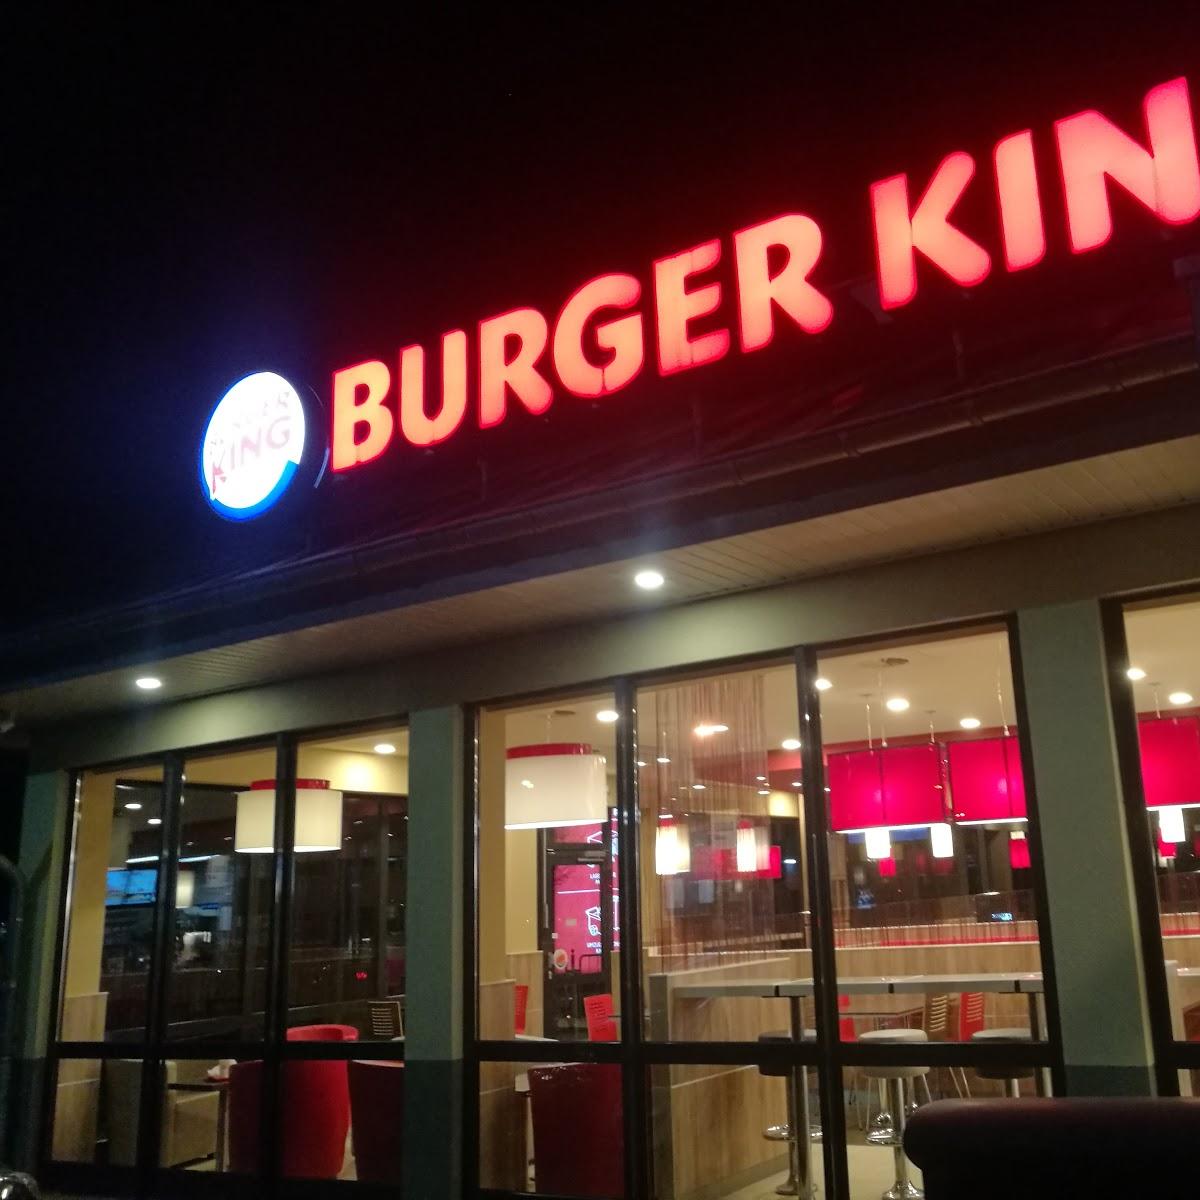 Restaurant "Burger King" in  Mönchengladbach